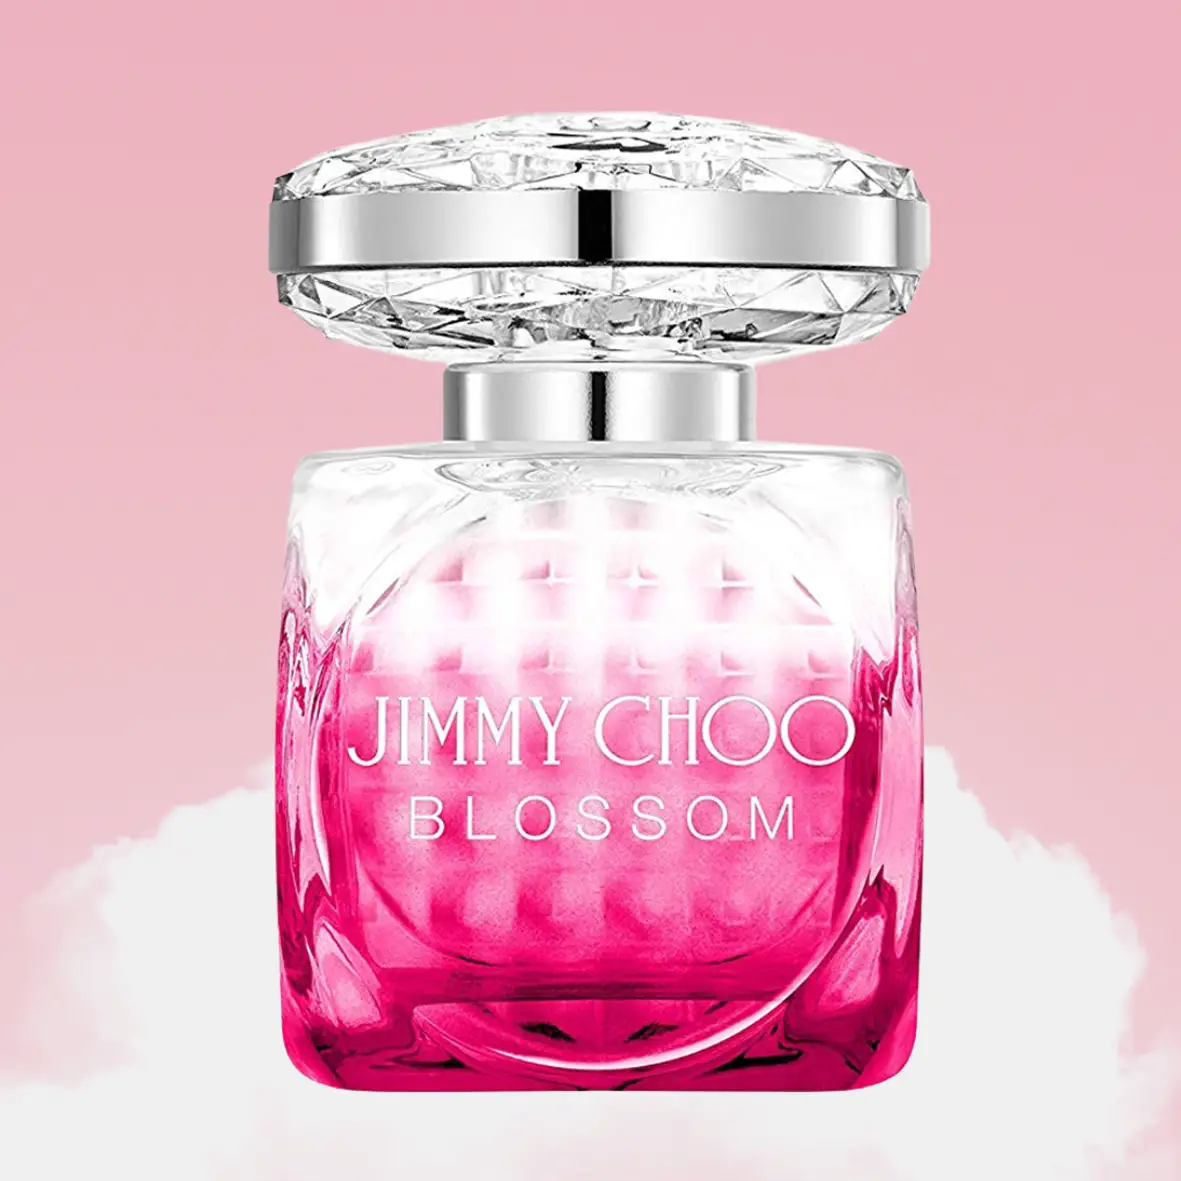 Jimmy Choo Blossom
Best Sweet Pea Blossom Perfumes